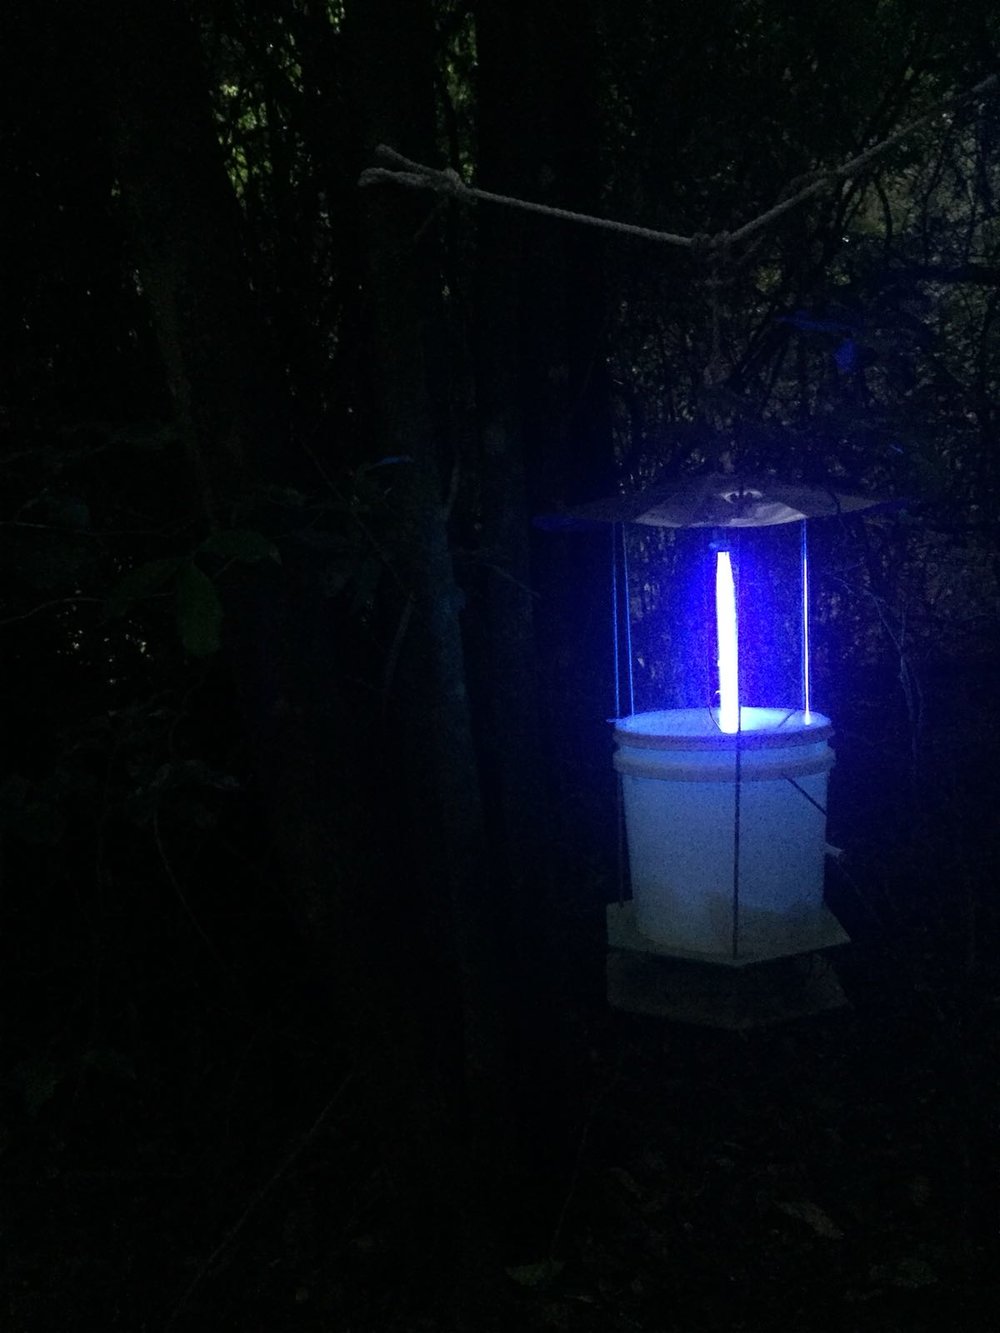 Pennsylvania-style light trap at night